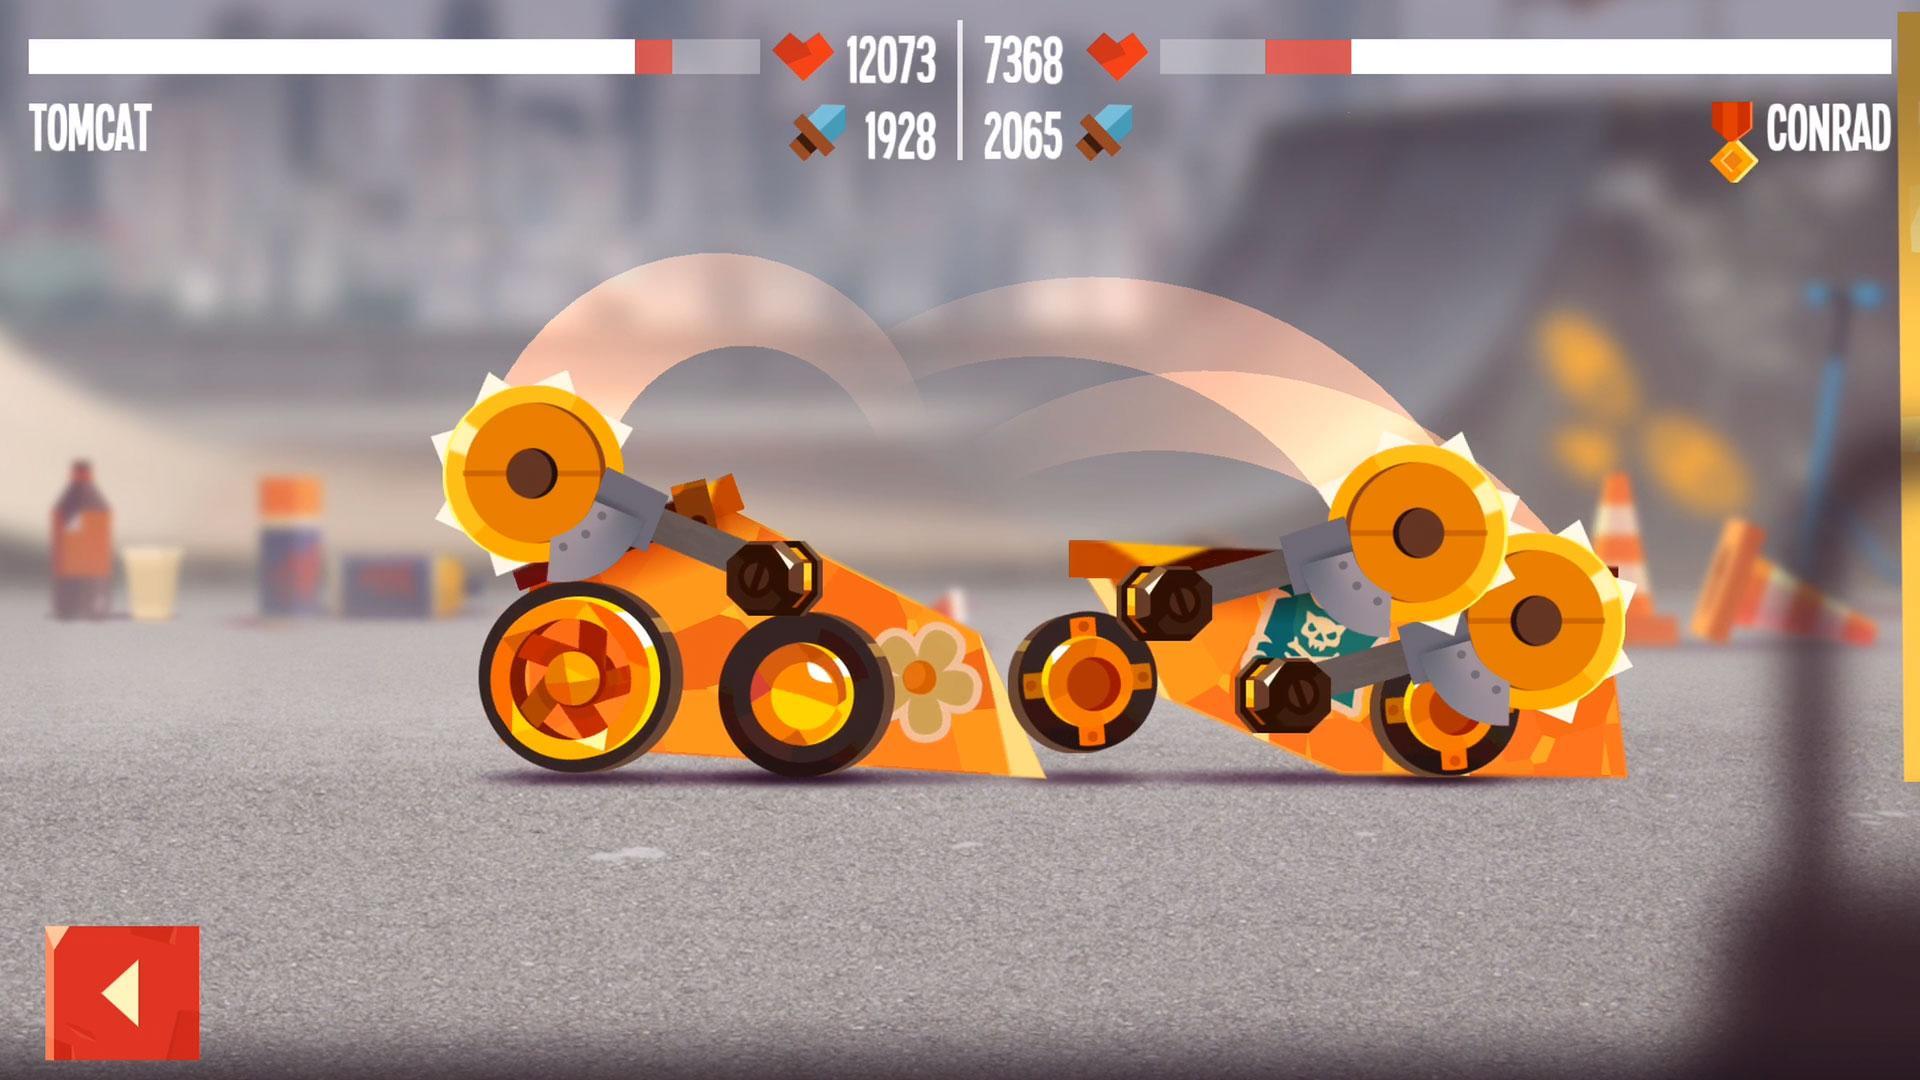 Screenshot of CATS: Crash Arena Turbo Stars